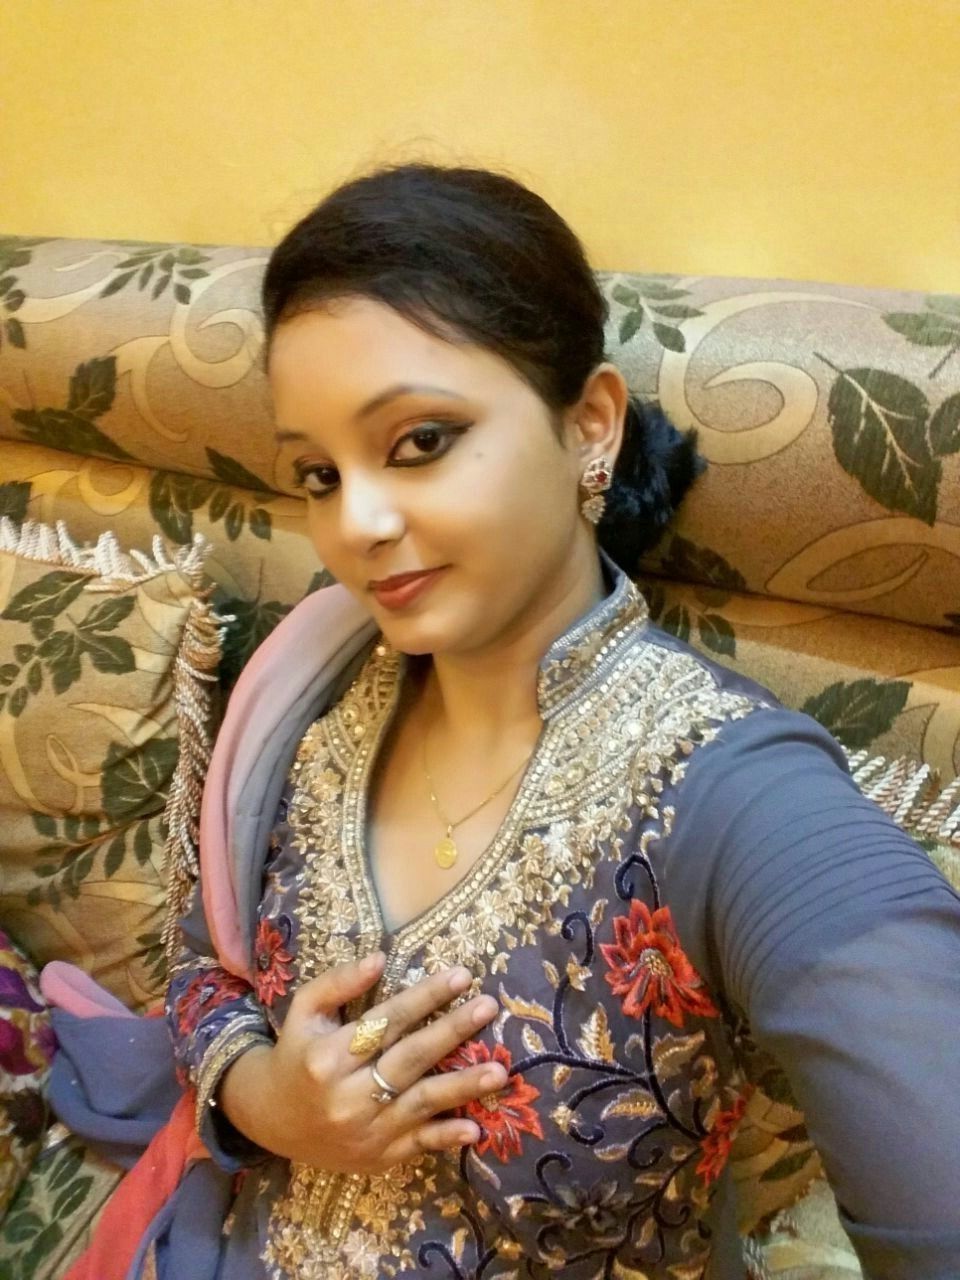 Facebook sex women indian girl big hot